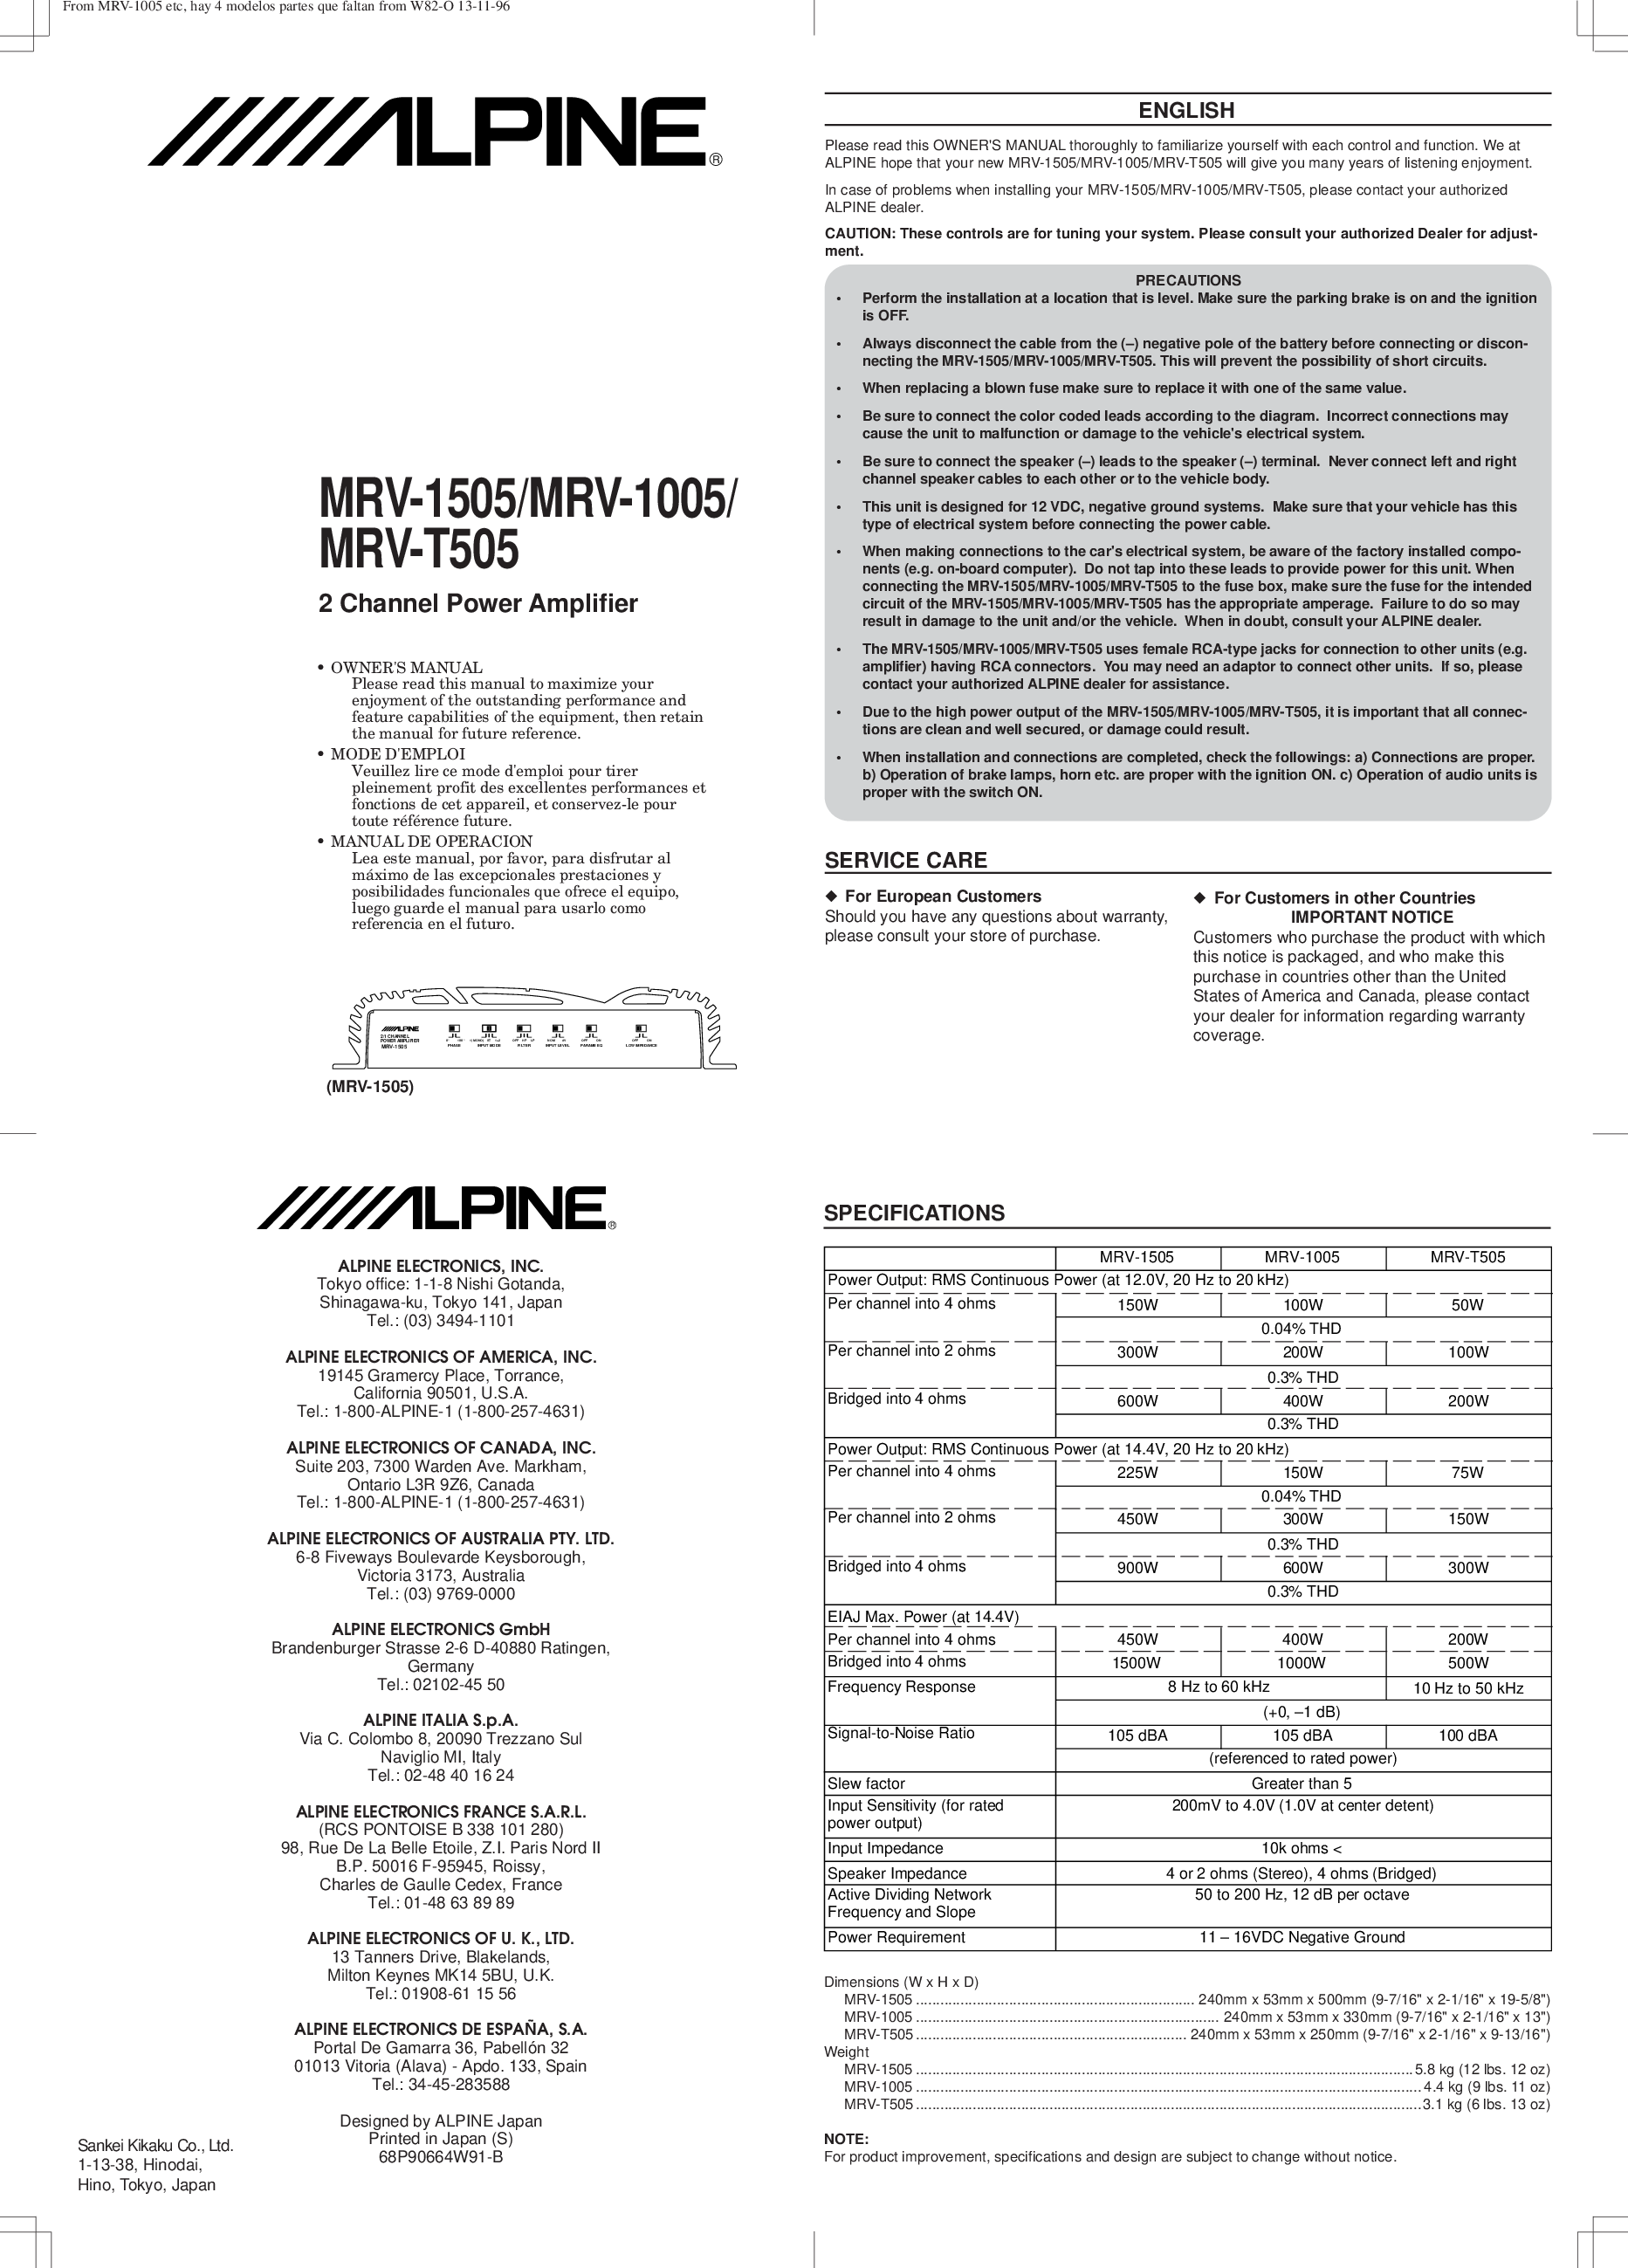 Alpine MRV-1005 User Manual